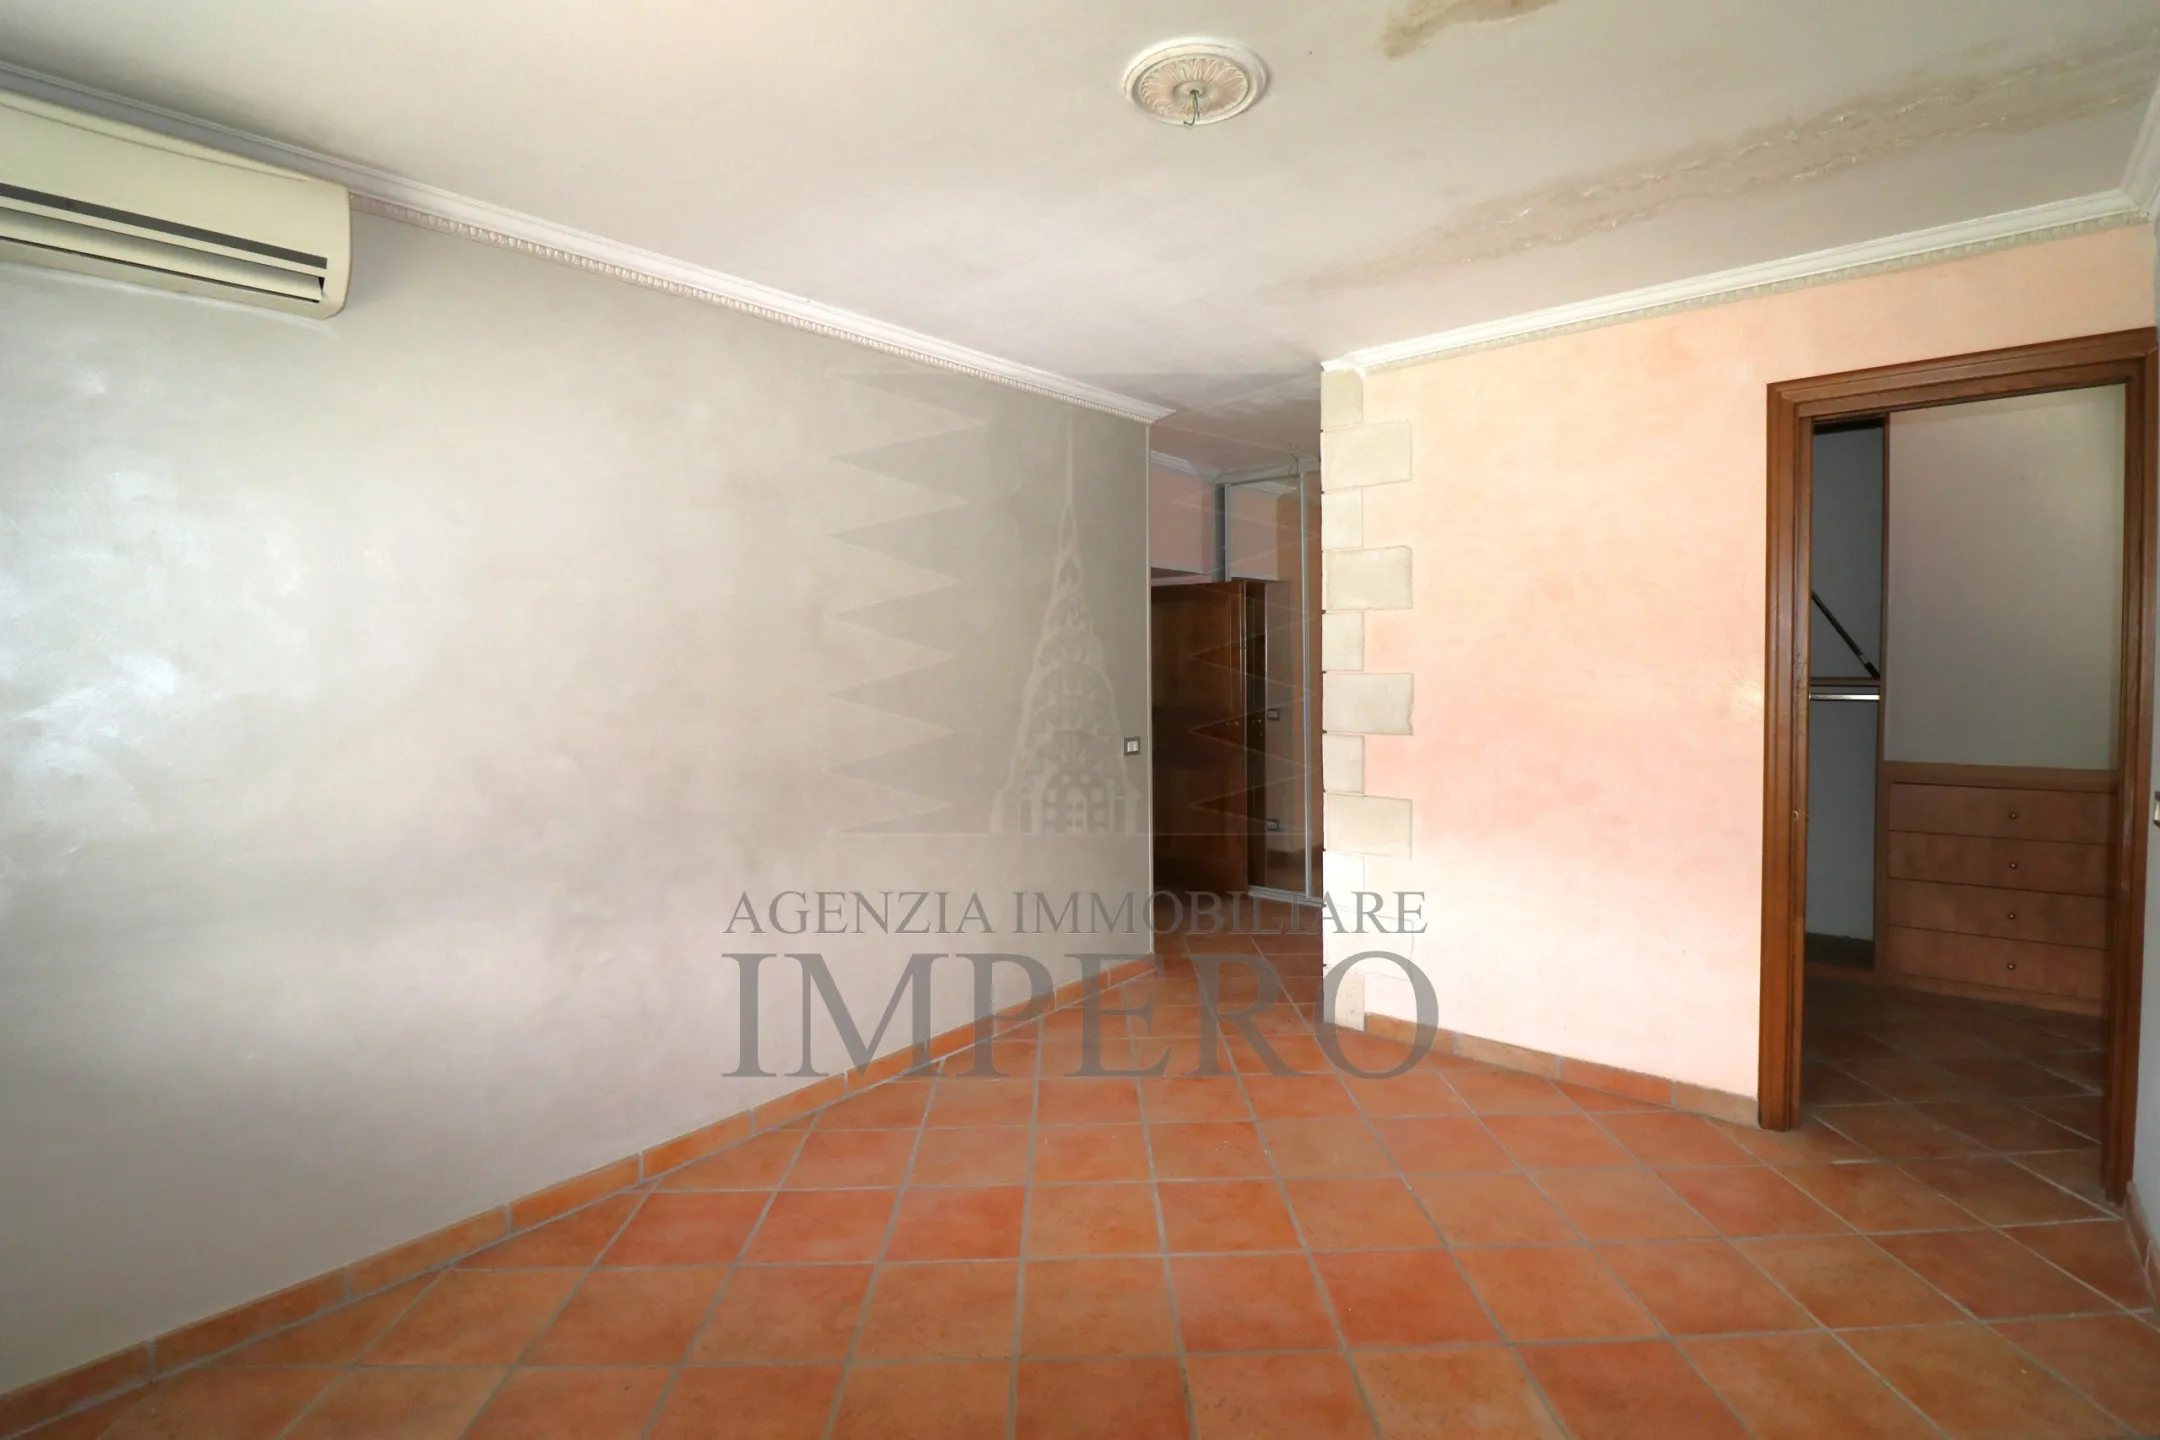 Immagine per Porzione di casa in vendita a Ventimiglia 101B